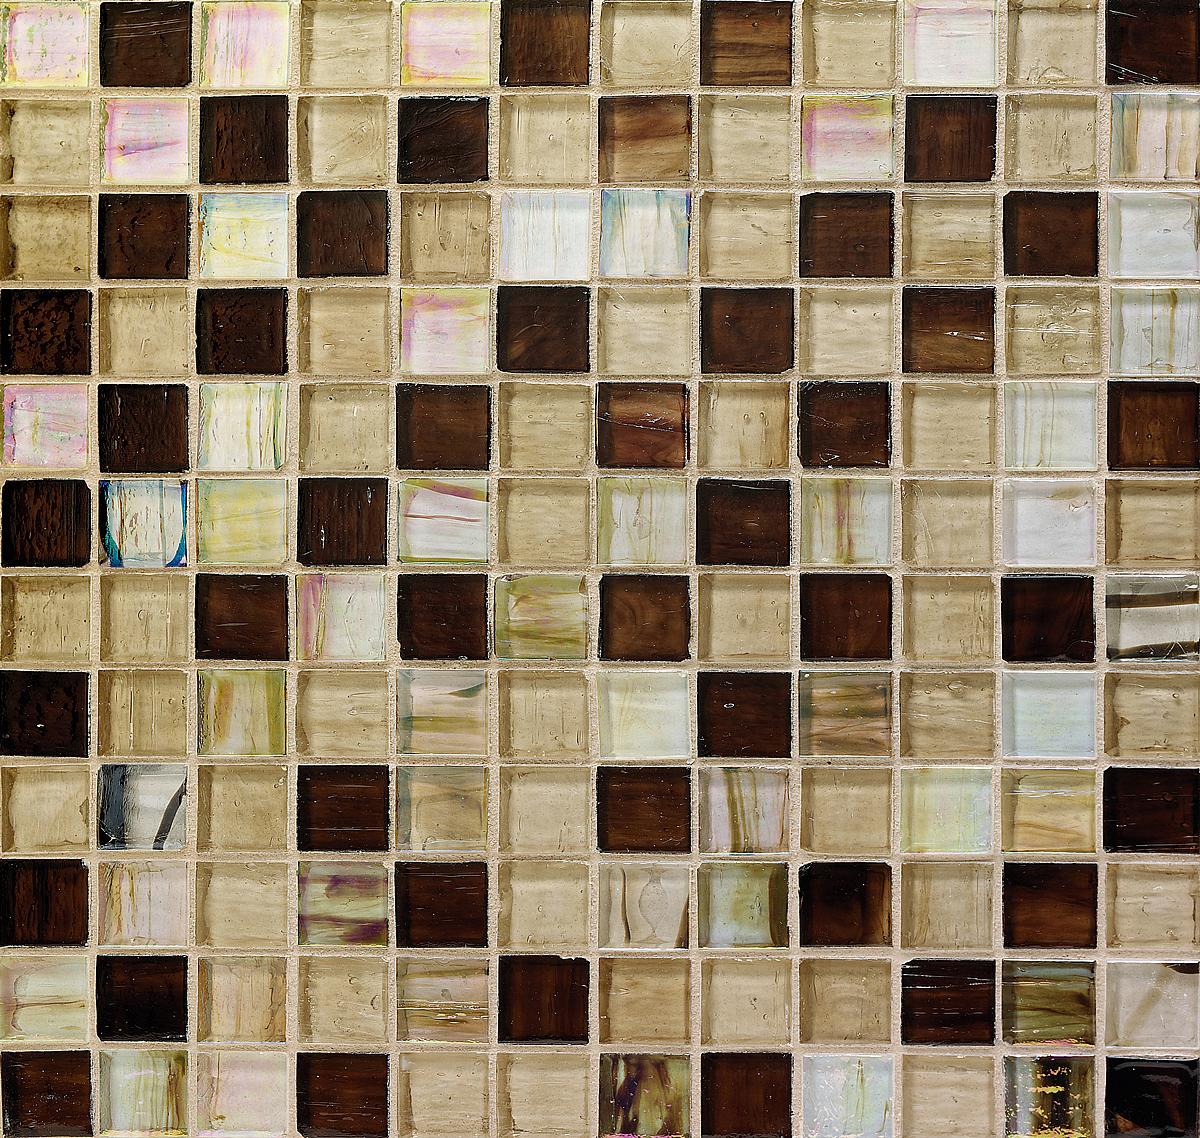 Fusion Glass 1" x 1" Mosaic Tile